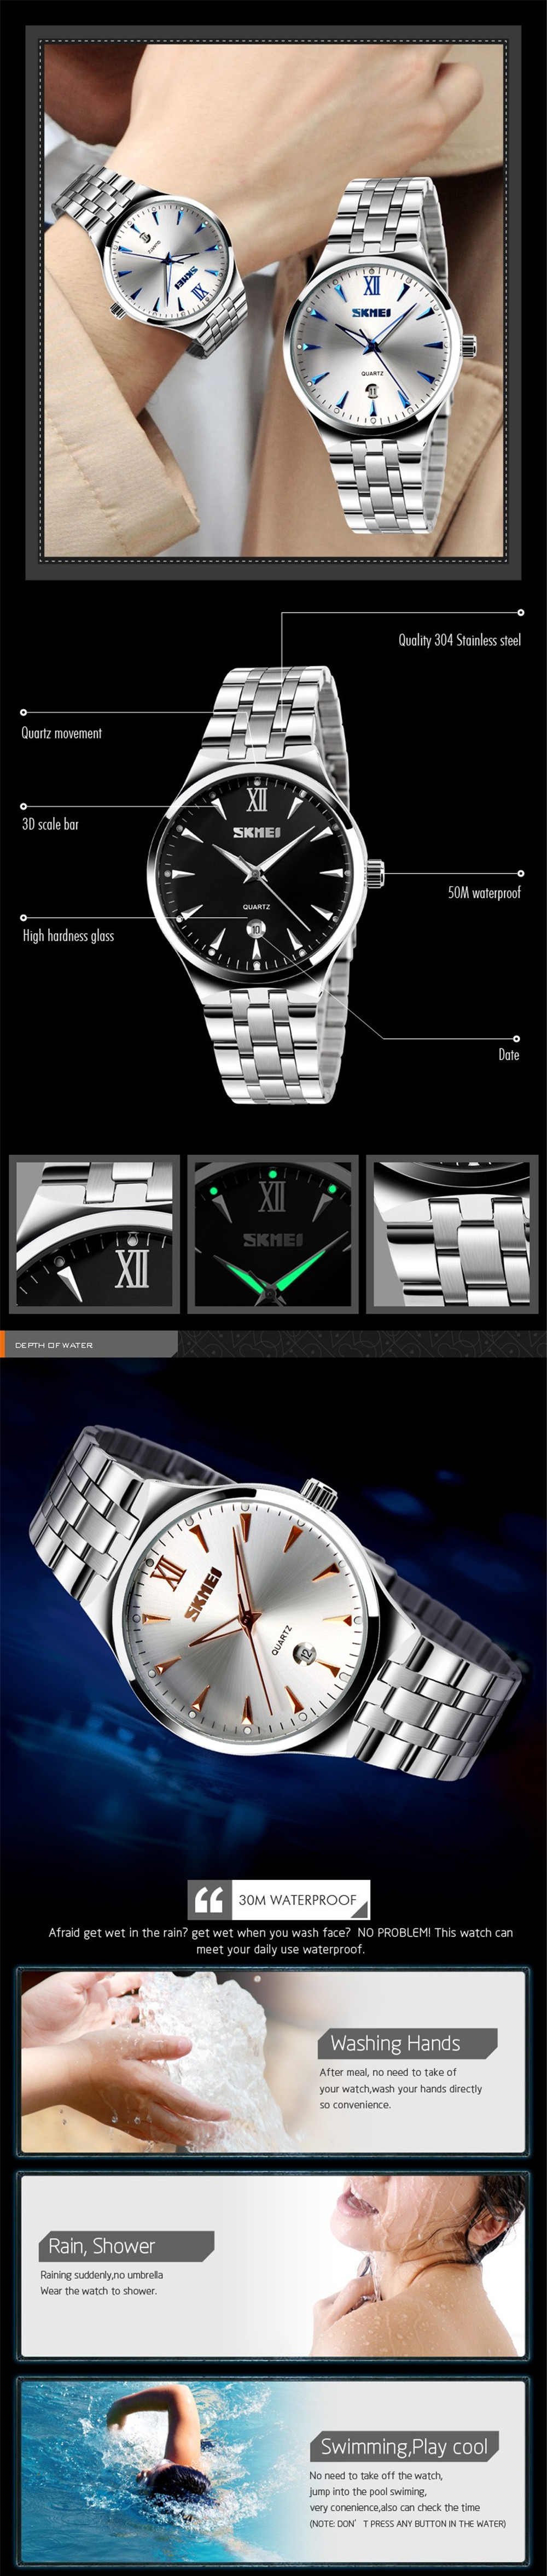 SKMEI Men's Quartz Top Luxury Brand Fashion Sport Waterproof Clock Wrist Watch